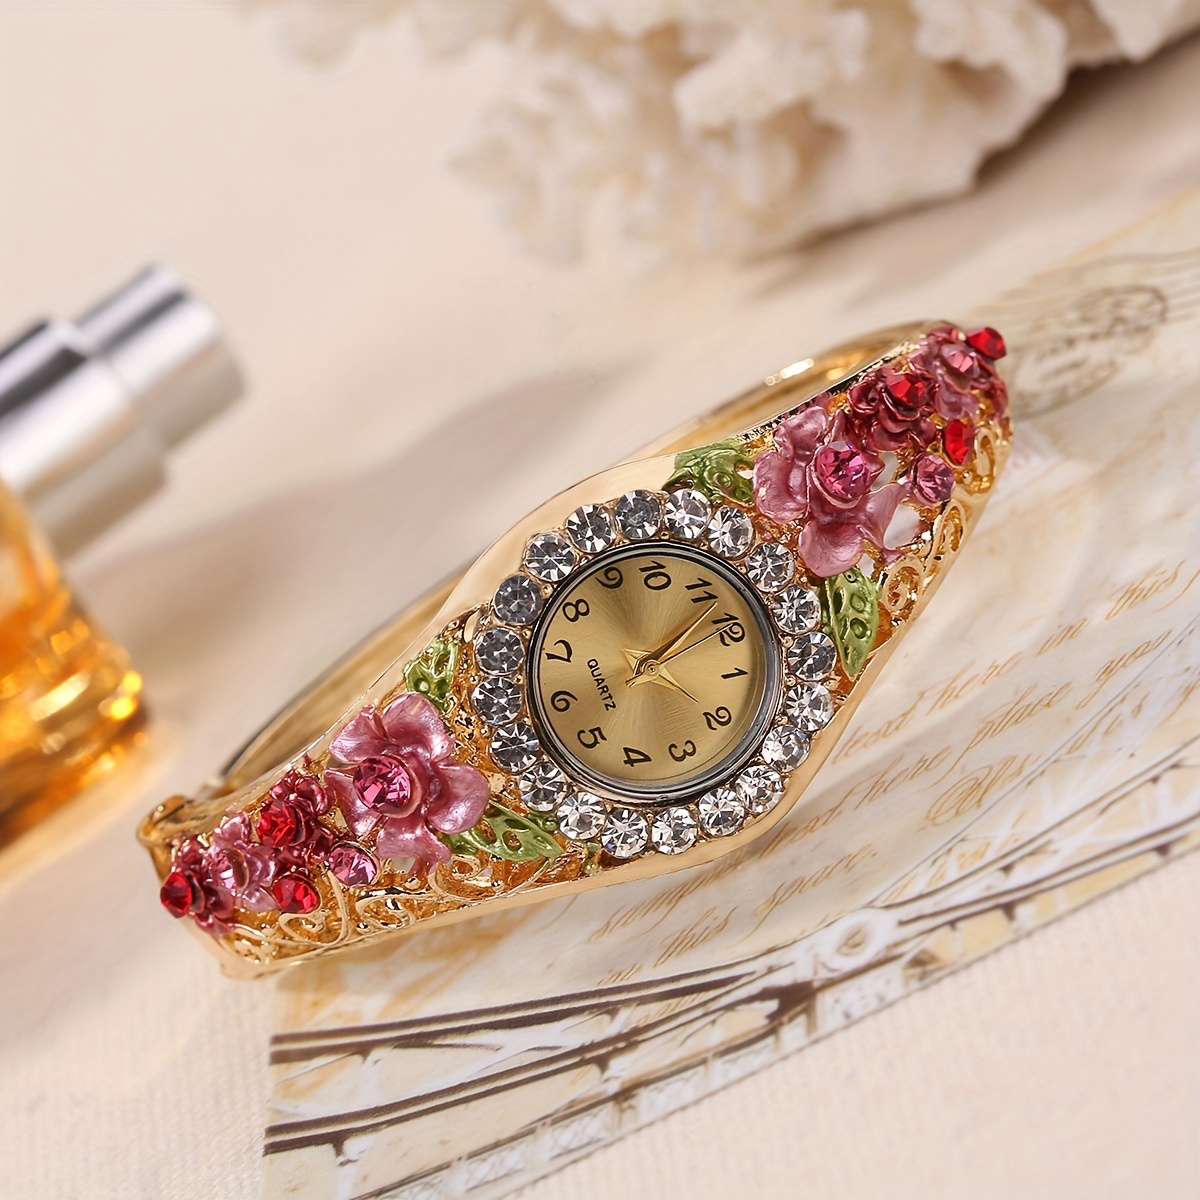 2pcs set womens watch vintage flower quartz bangle watch baroque rhinestone analog wrist watch necklace gift for mom her details 5